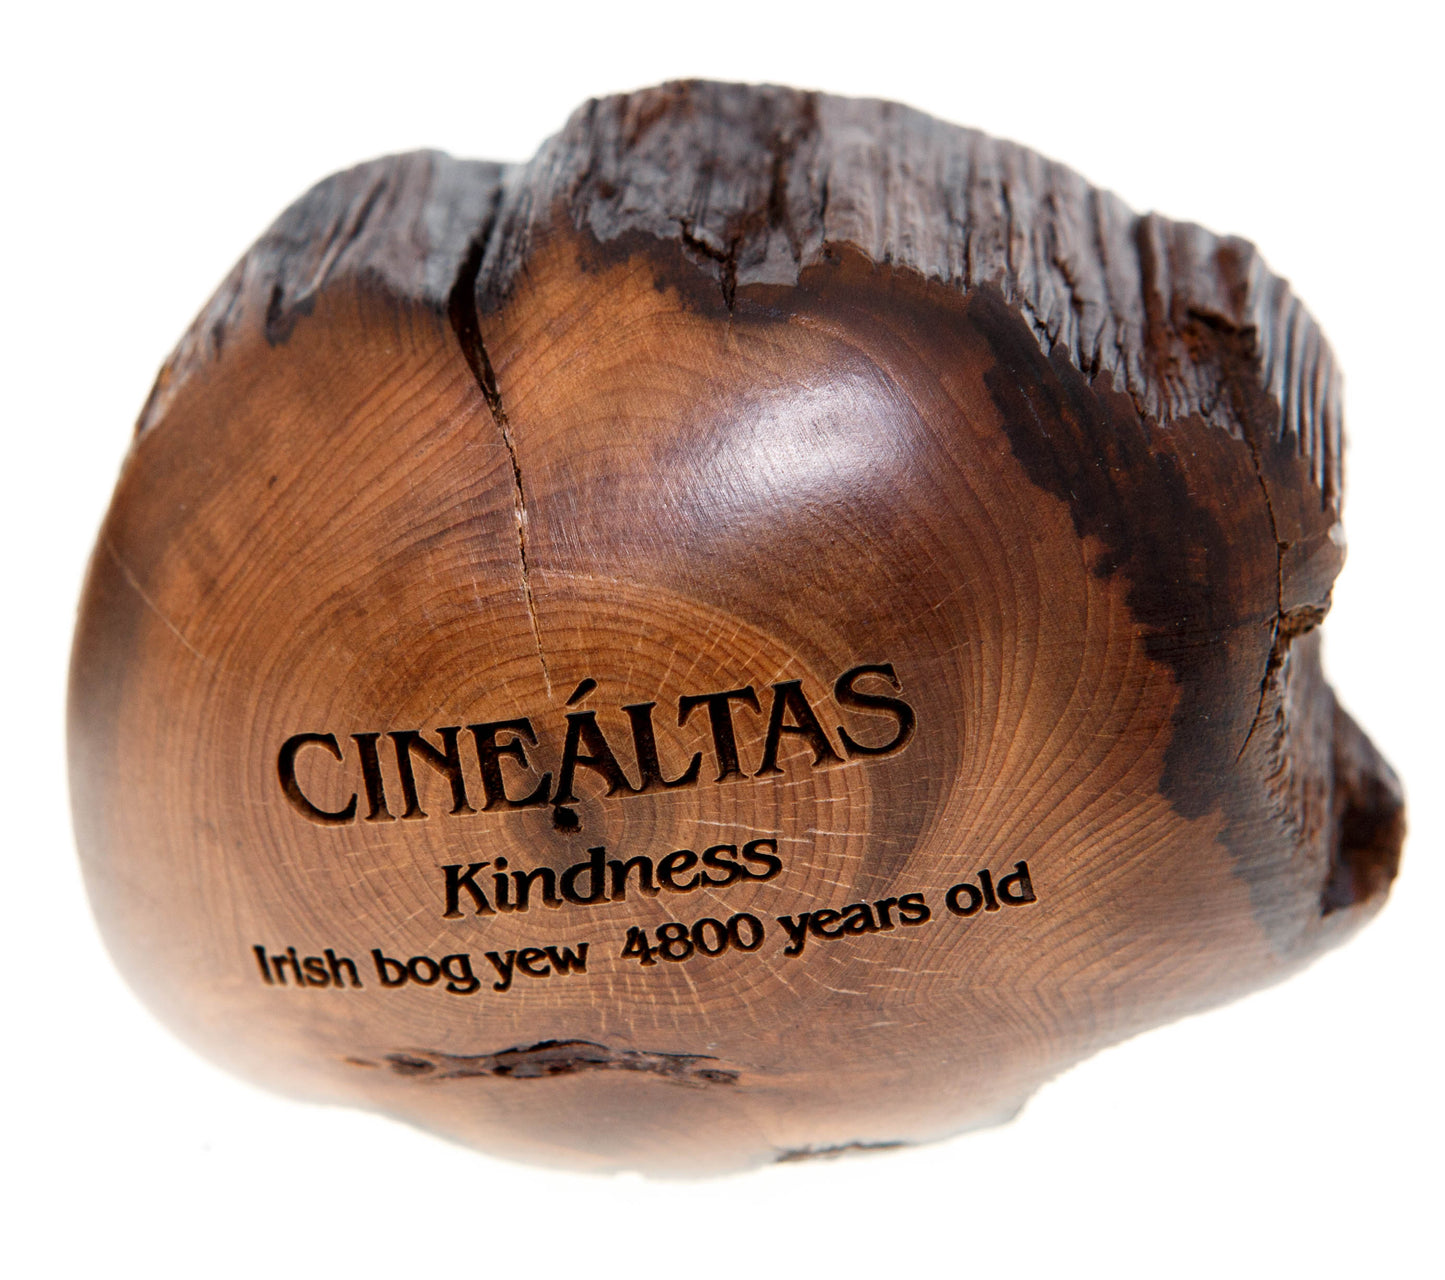 Wishstone CINEÁLTAS Kindness Irish bog yew 4800 years old